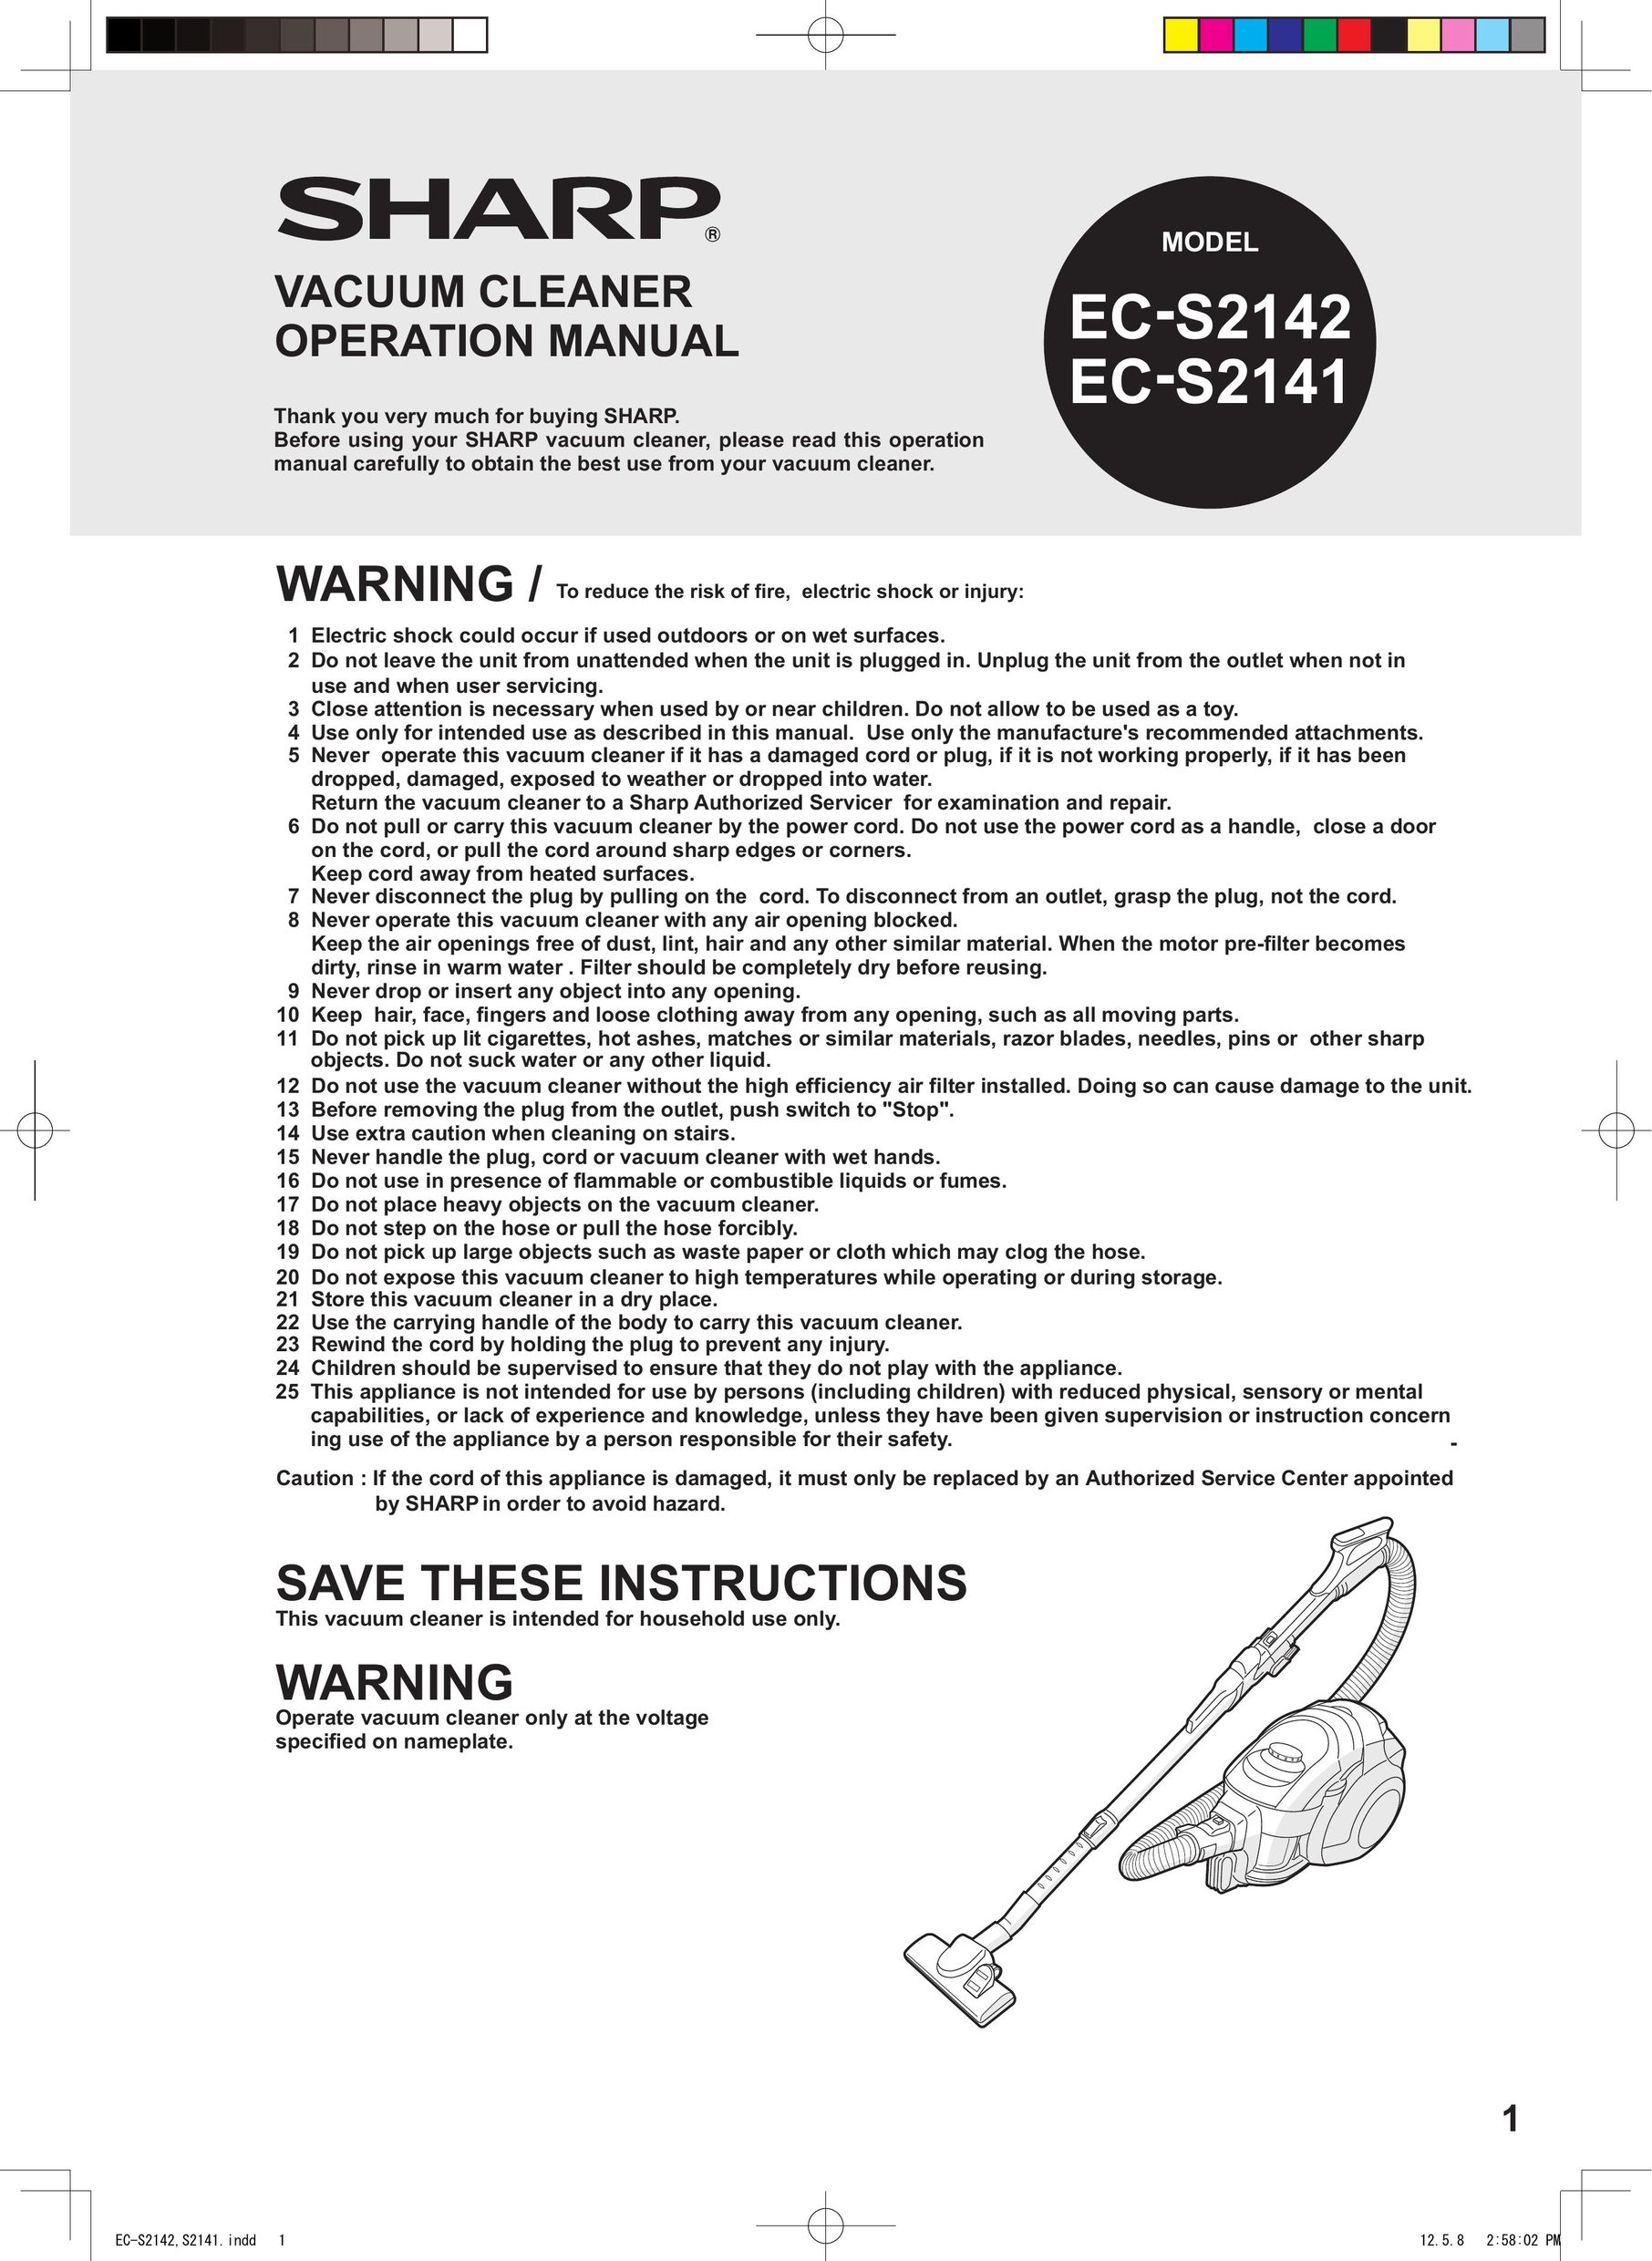 Sharp EC-S2142 Vacuum Cleaner User Manual